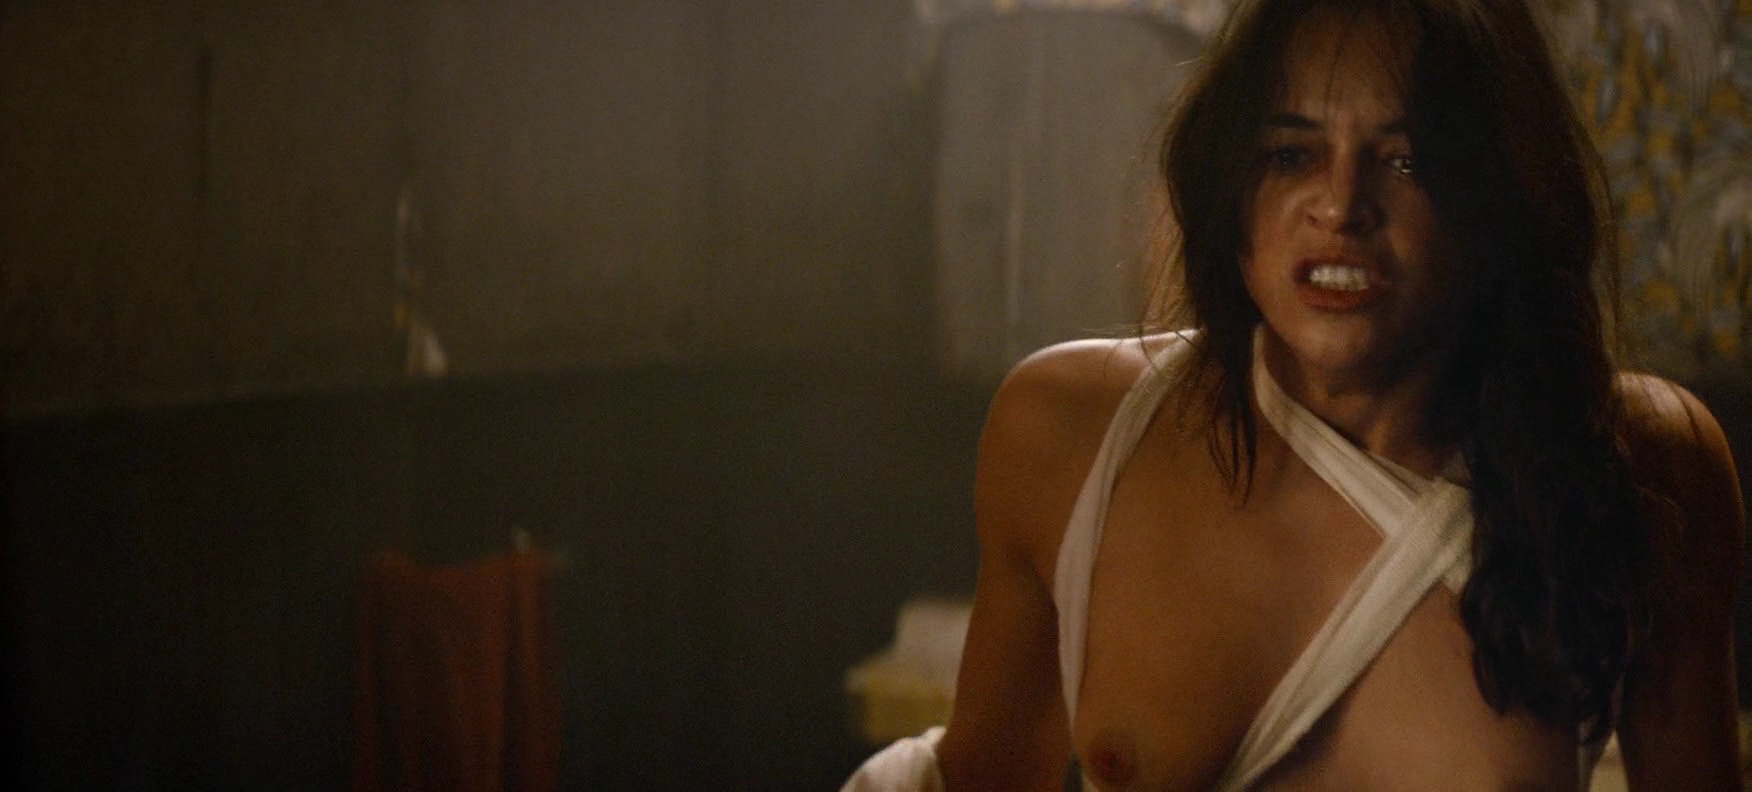 Michelle rodriguez nude Michelle Rodriguez.